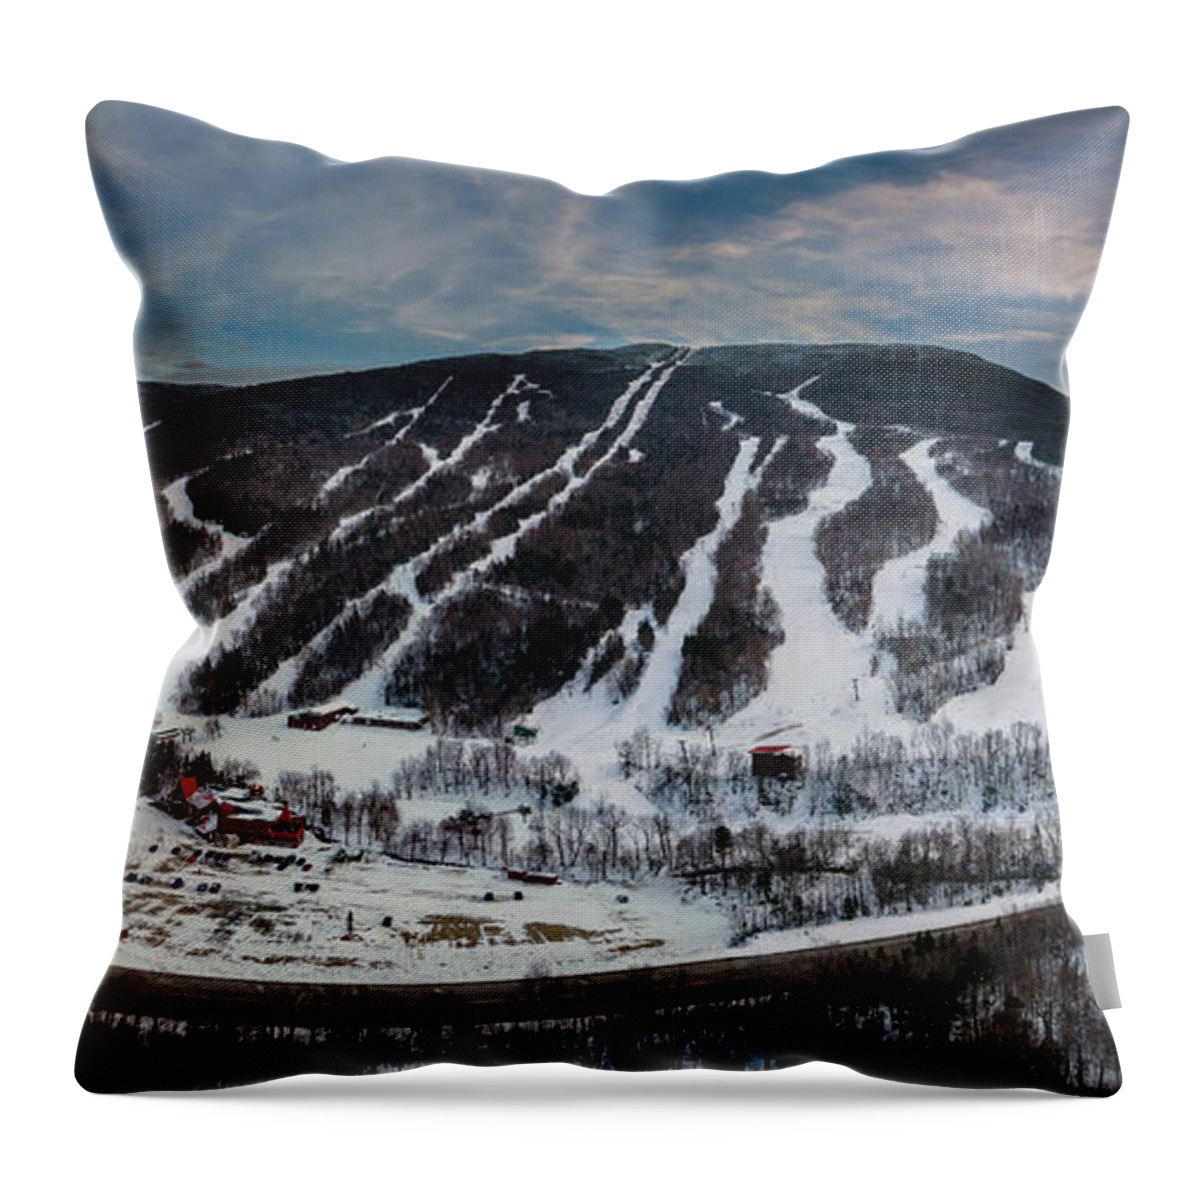 Wildcat Ski Area Throw Pillow featuring the photograph Wildcat Mountain, NH Panorama by John Rowe